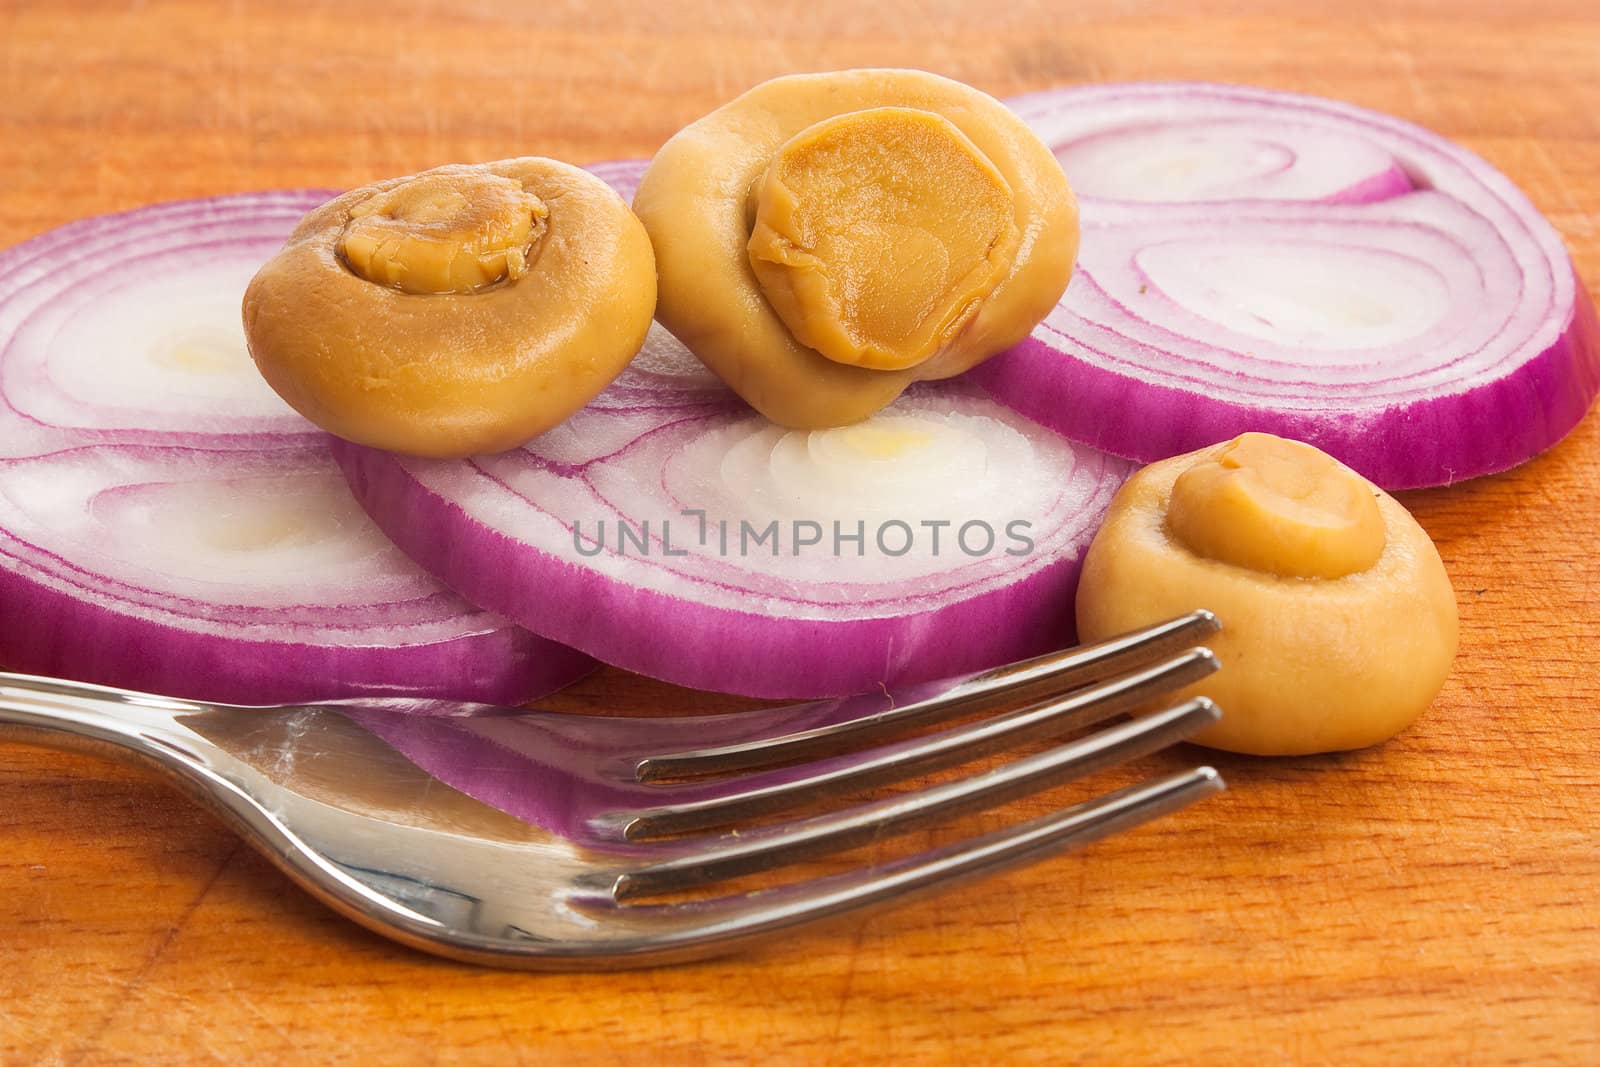 mushrooms and onions by oleg_zhukov